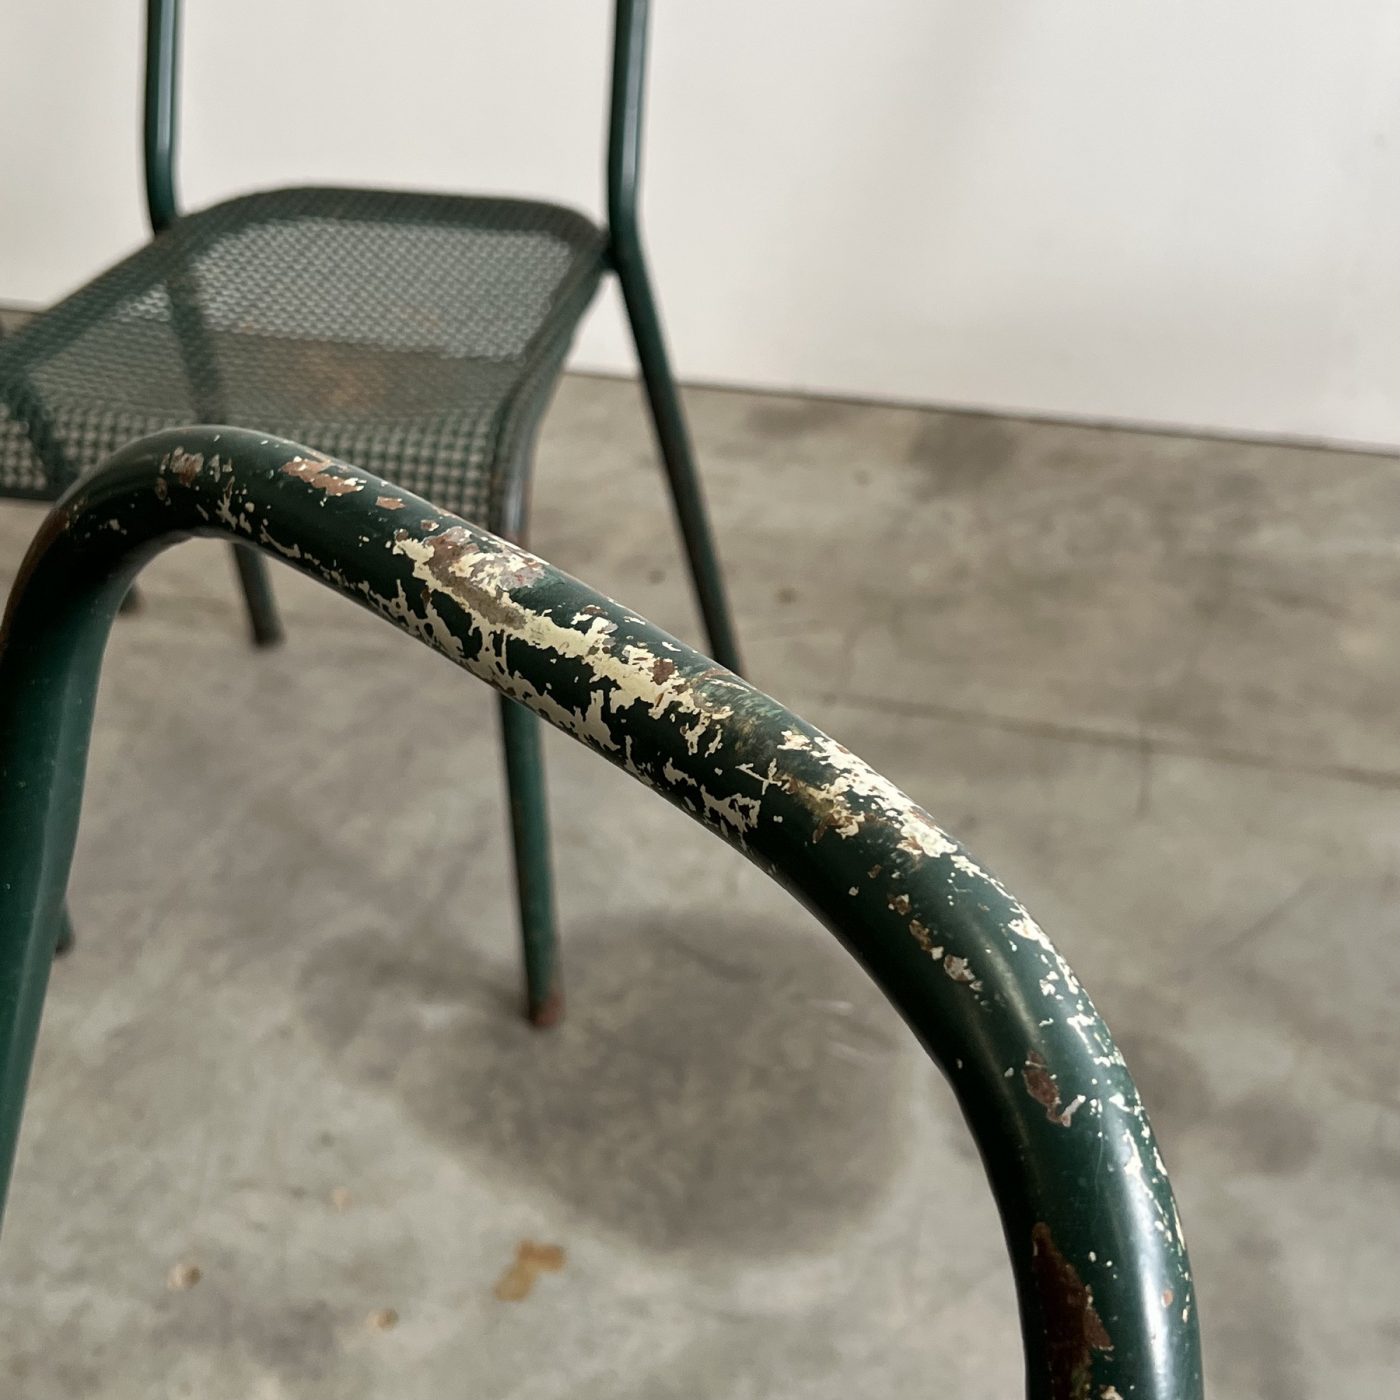 objet-vagabond-metal-chairs0003